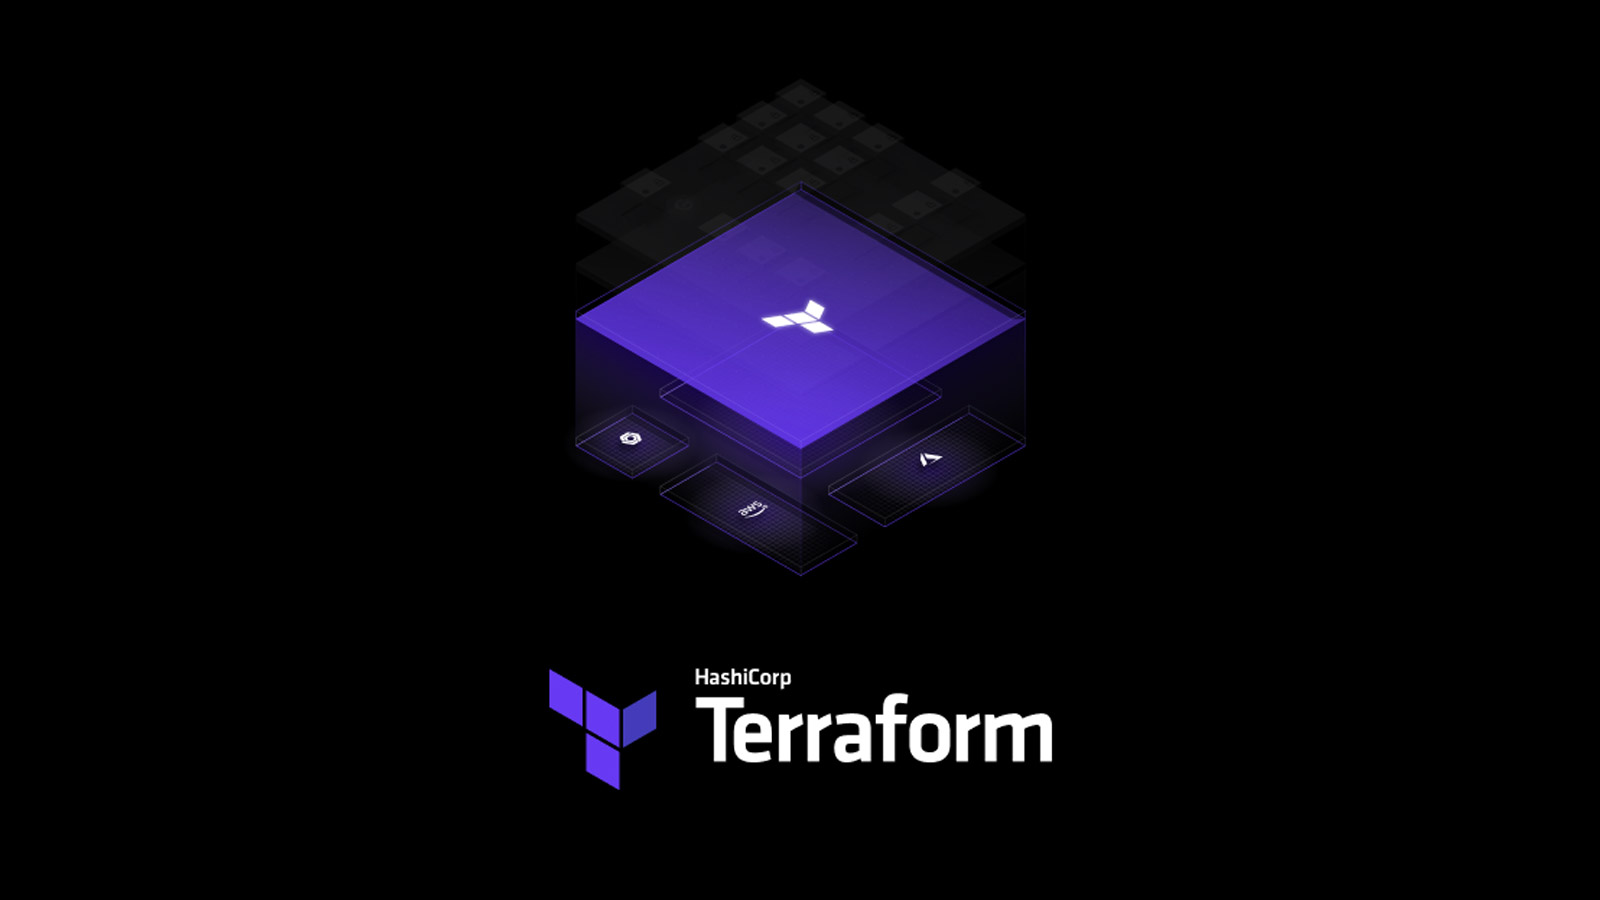 How to Install and Configure Terraform on Ubuntu 18.04